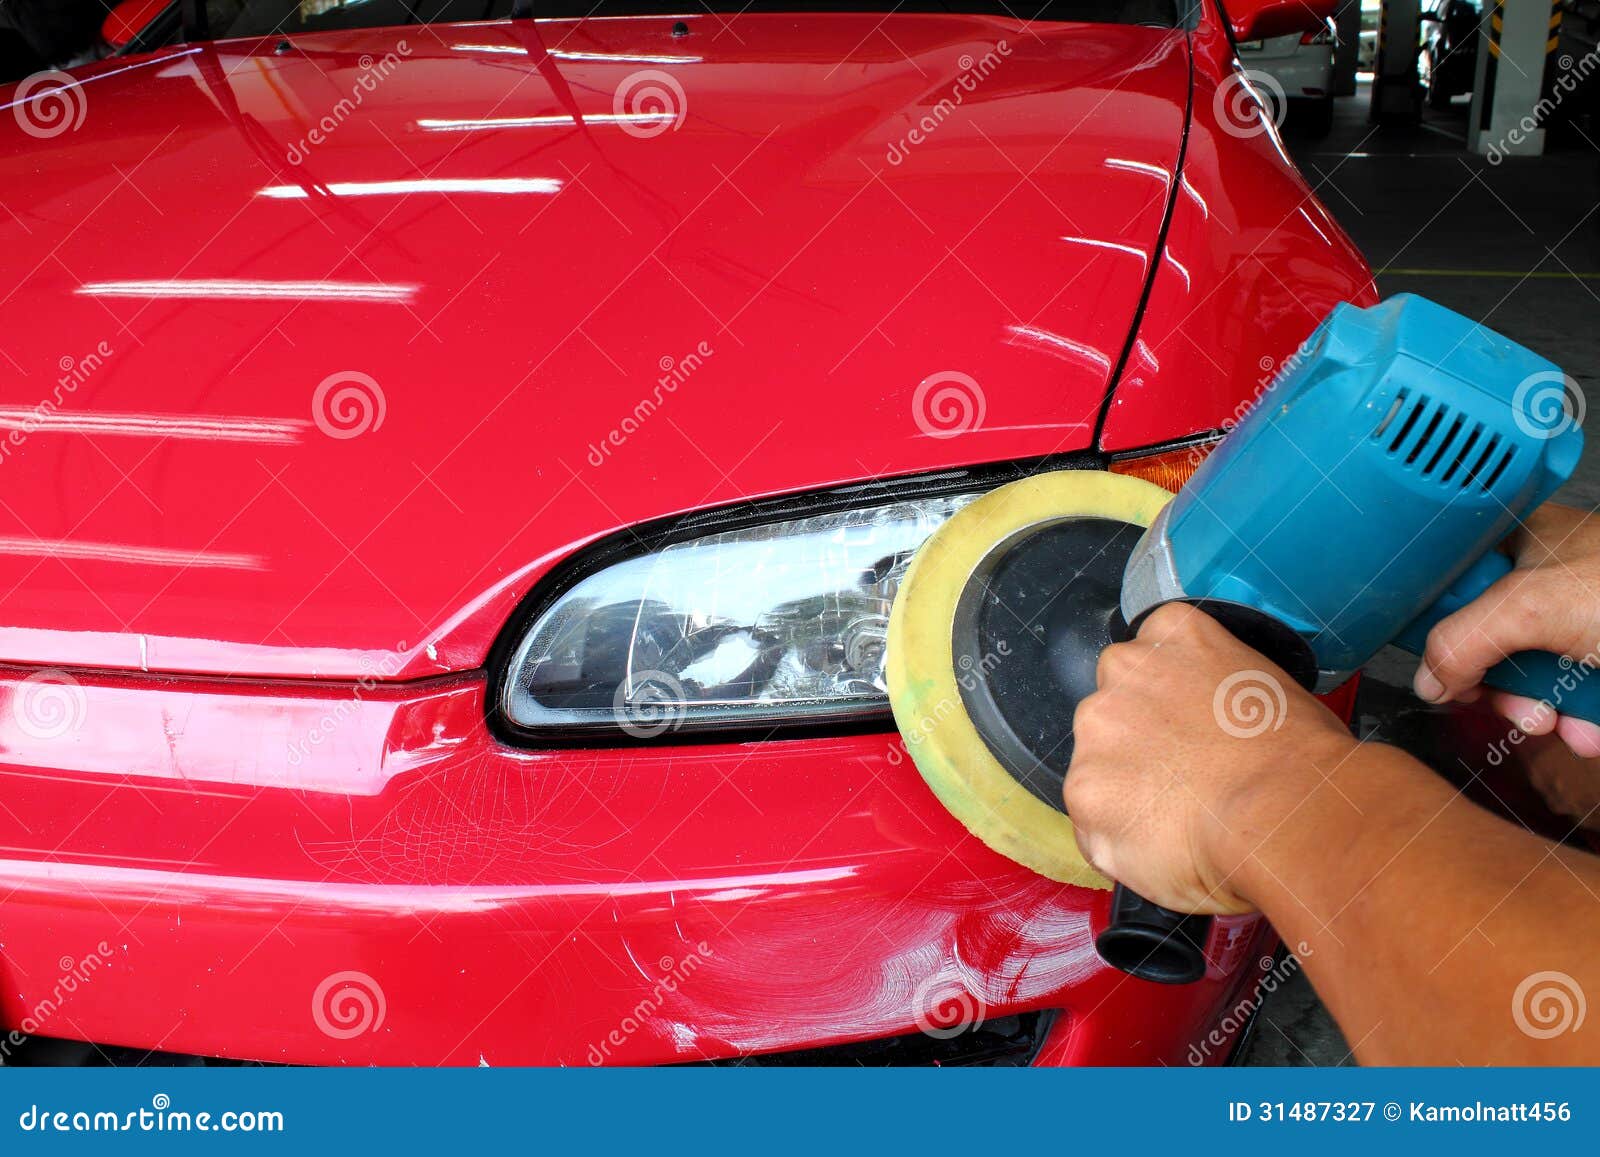 polishing the car